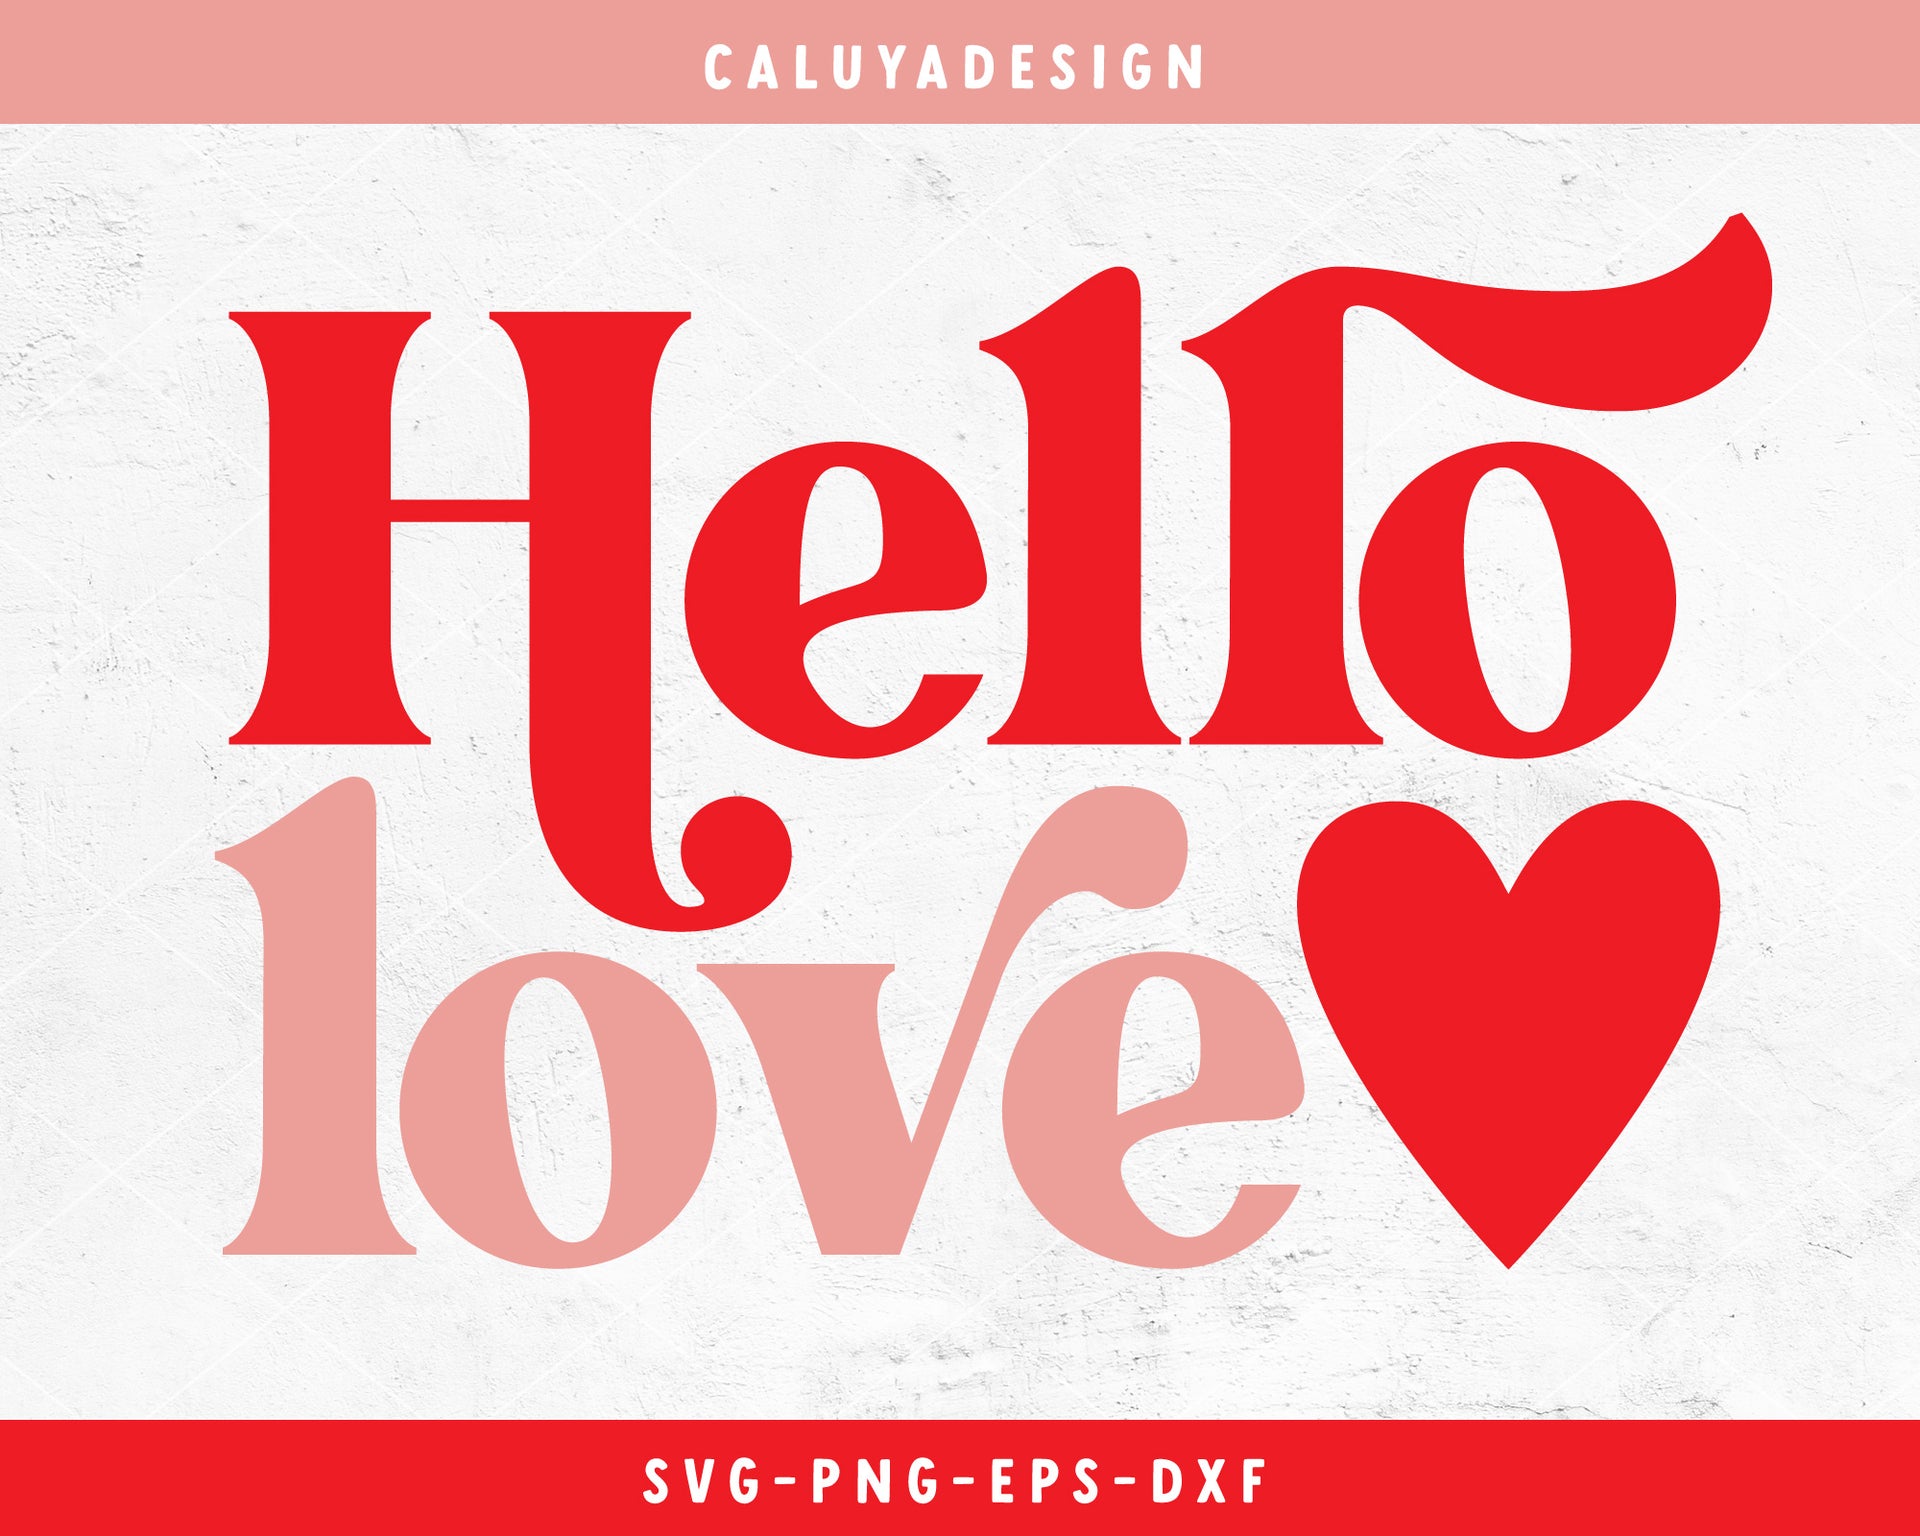 Premium Vector  Flat style hello love text sticker or tag symbol